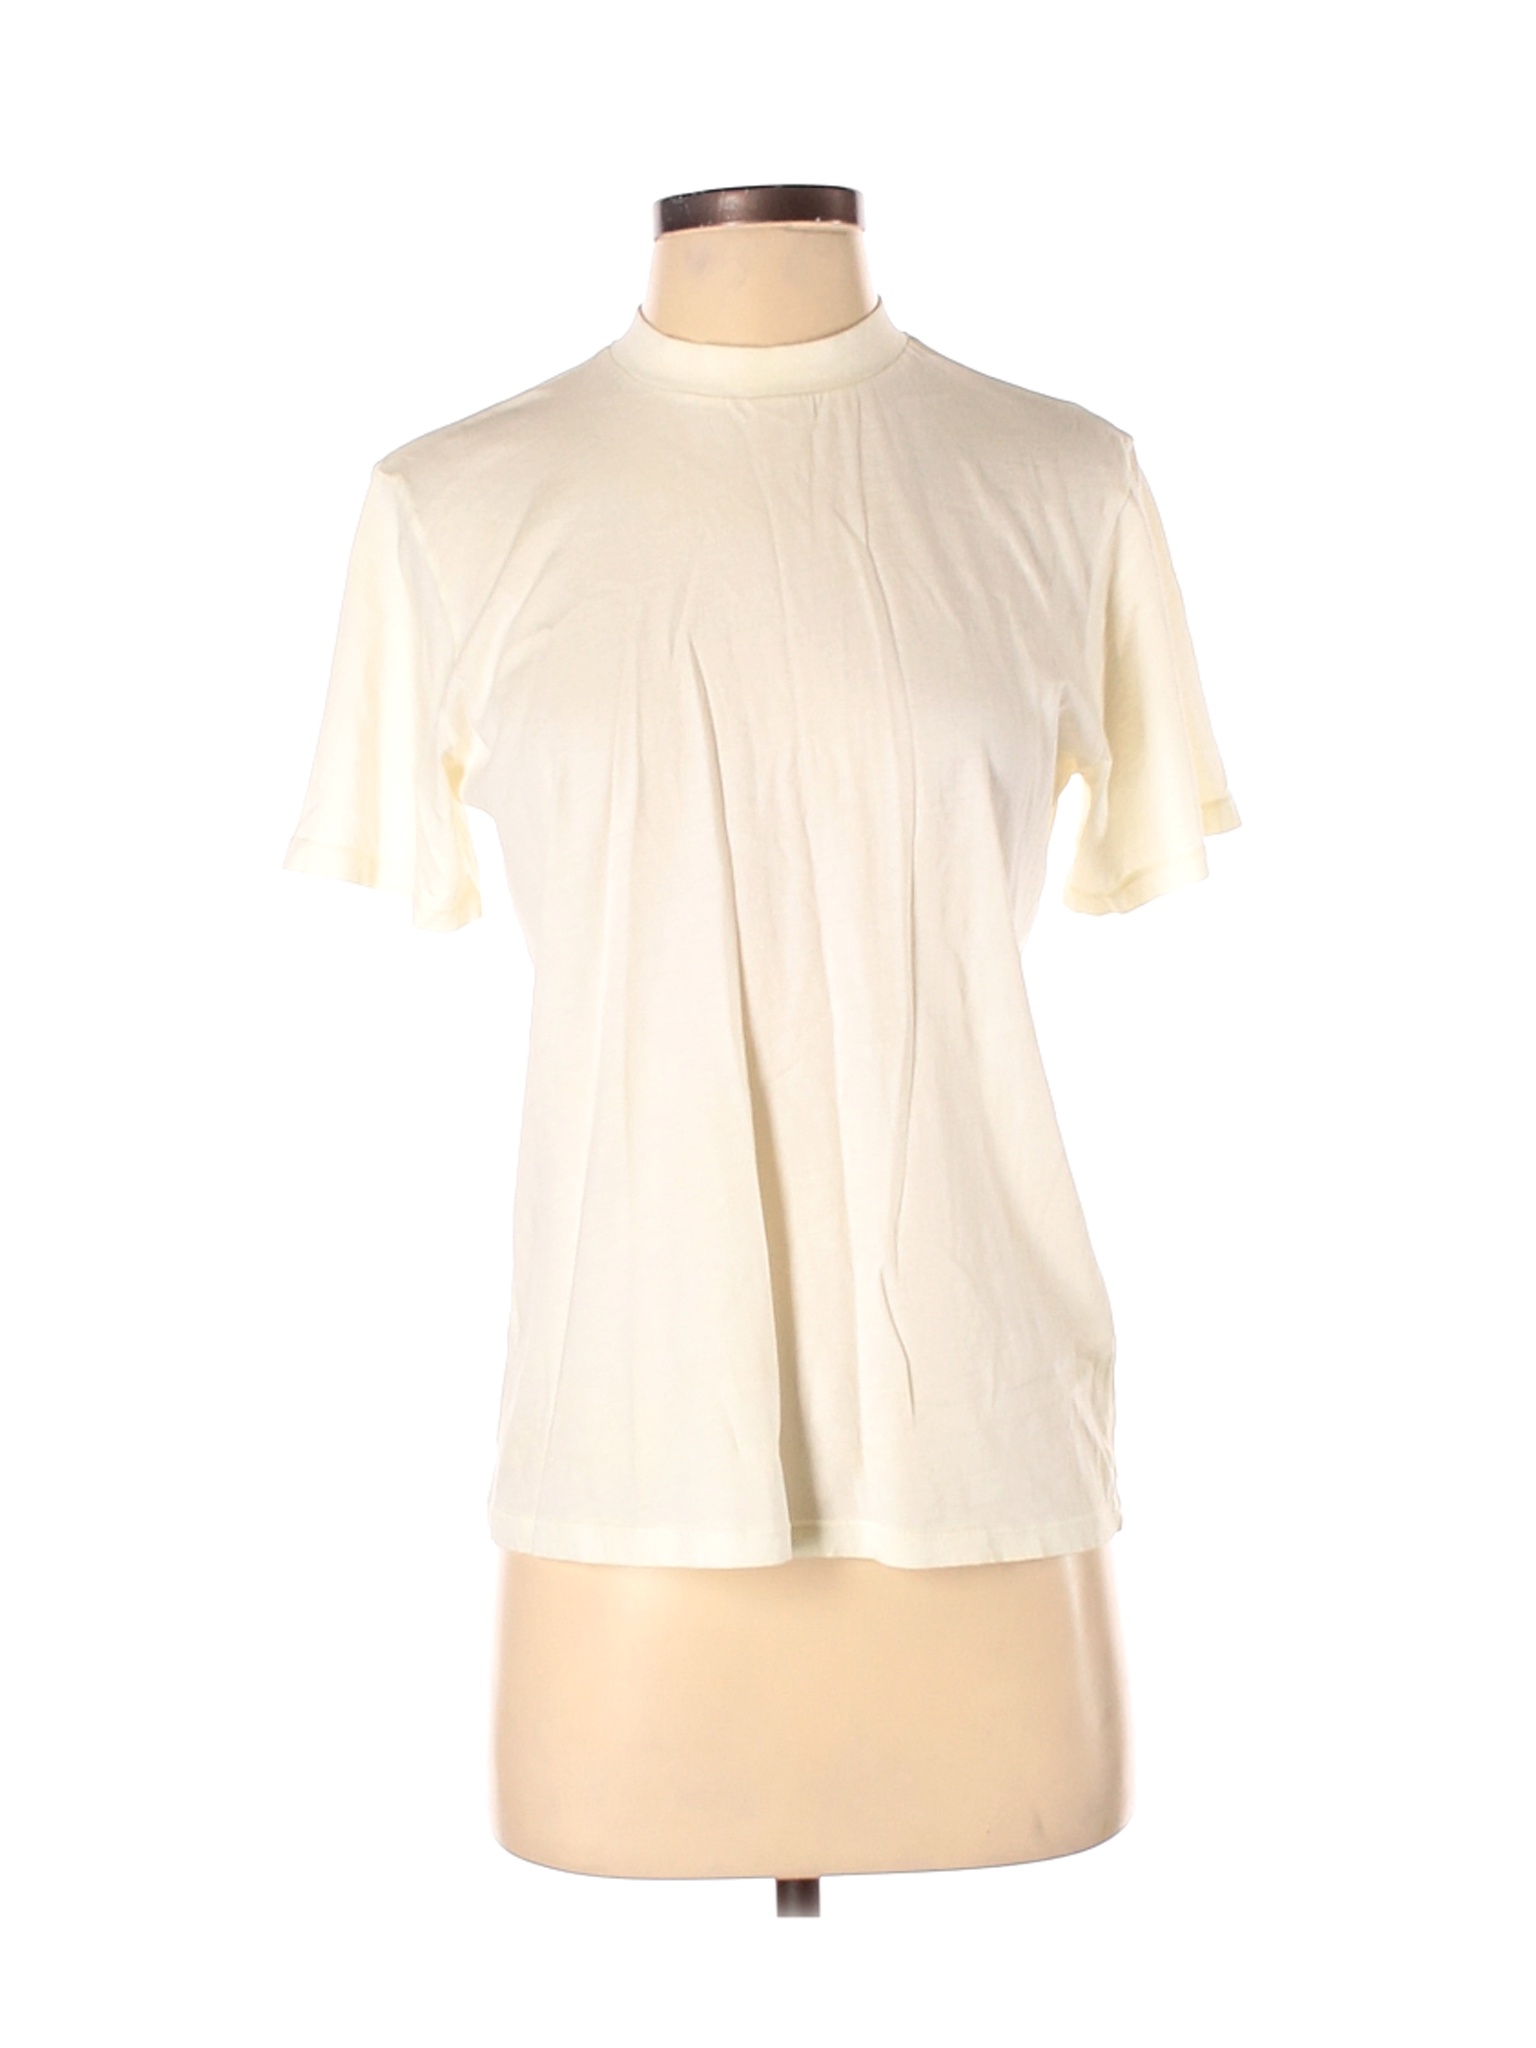 Stockholm Atelier X Other Stories Women Ivory Short Sleeve T-Shirt 2 | eBay